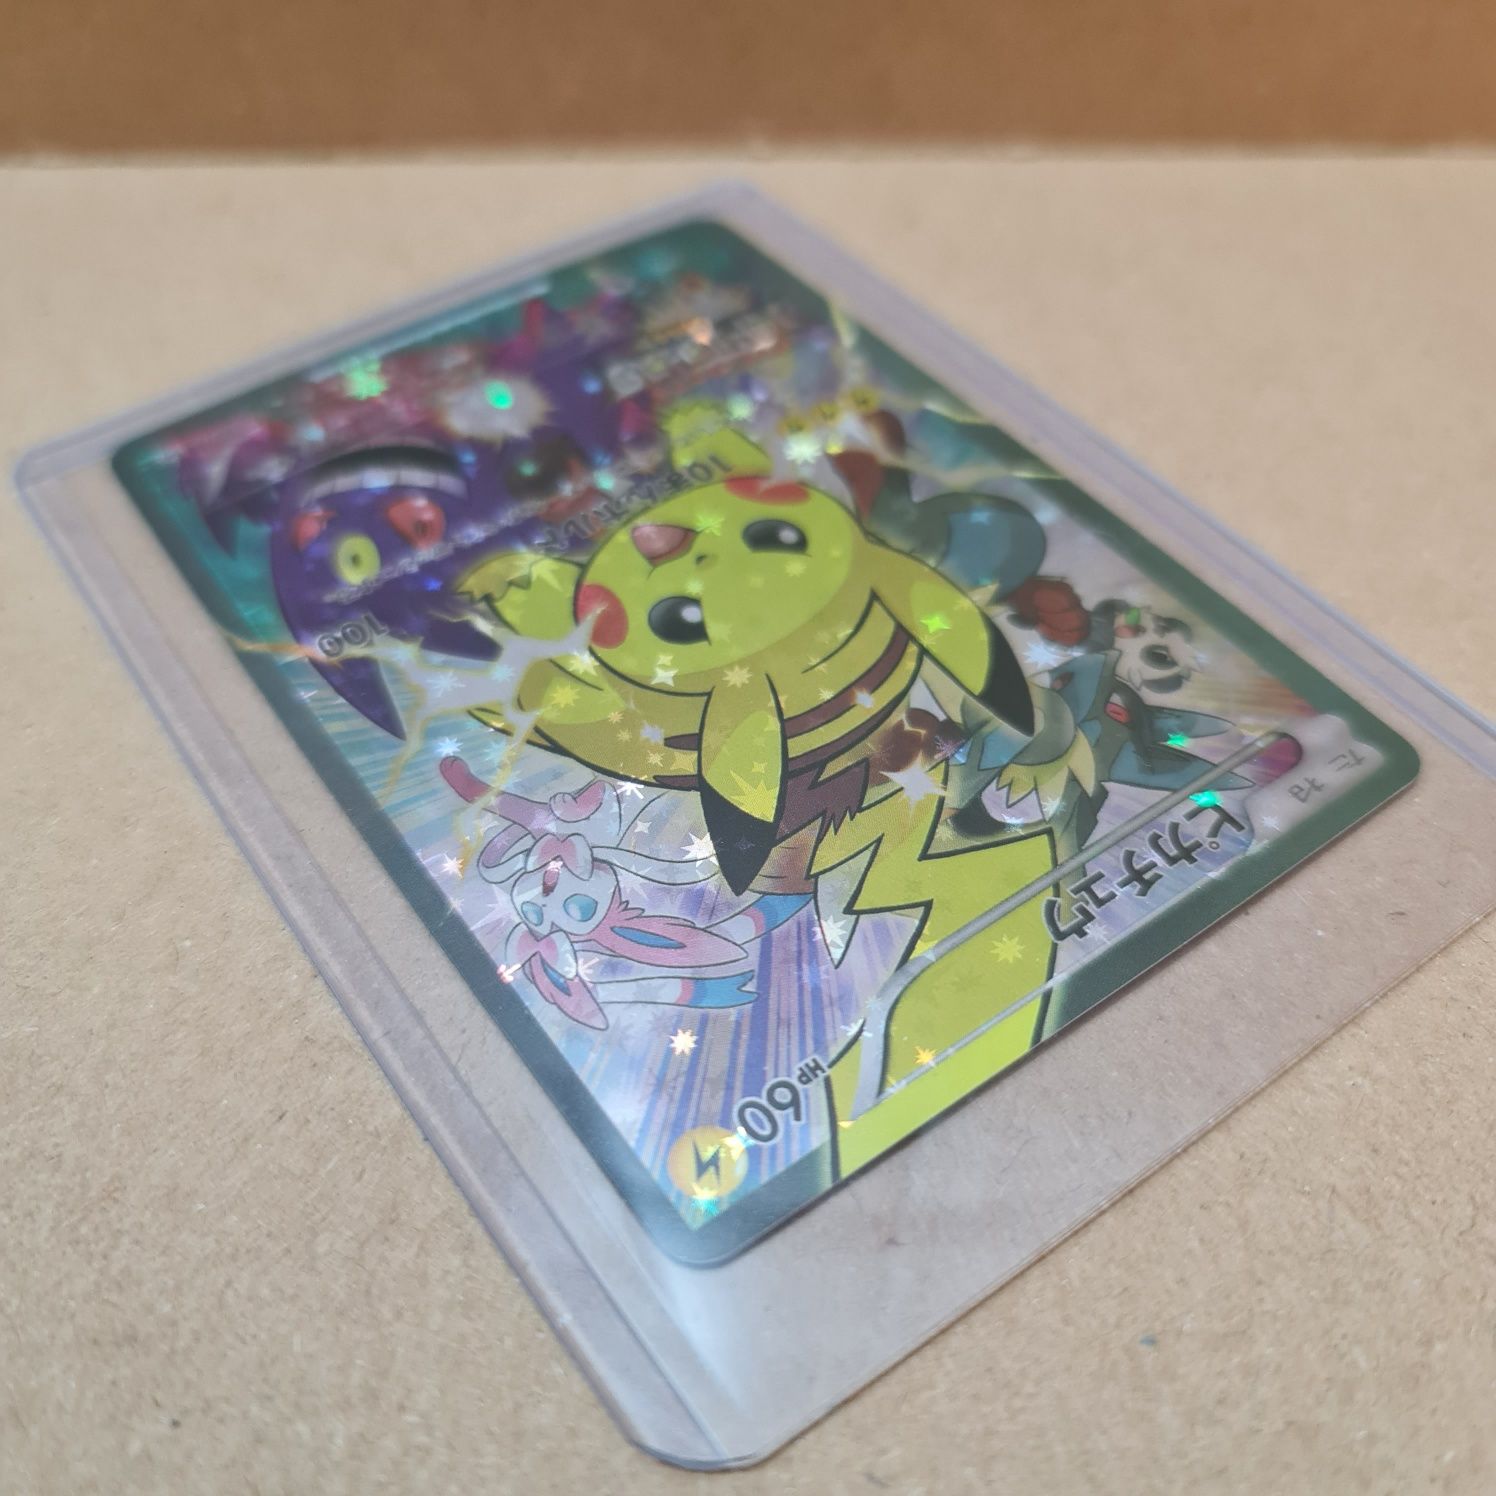 Carta Pokémon Pikachu [Battle Festa] 90/XY-P - Capa Protetora Incluída